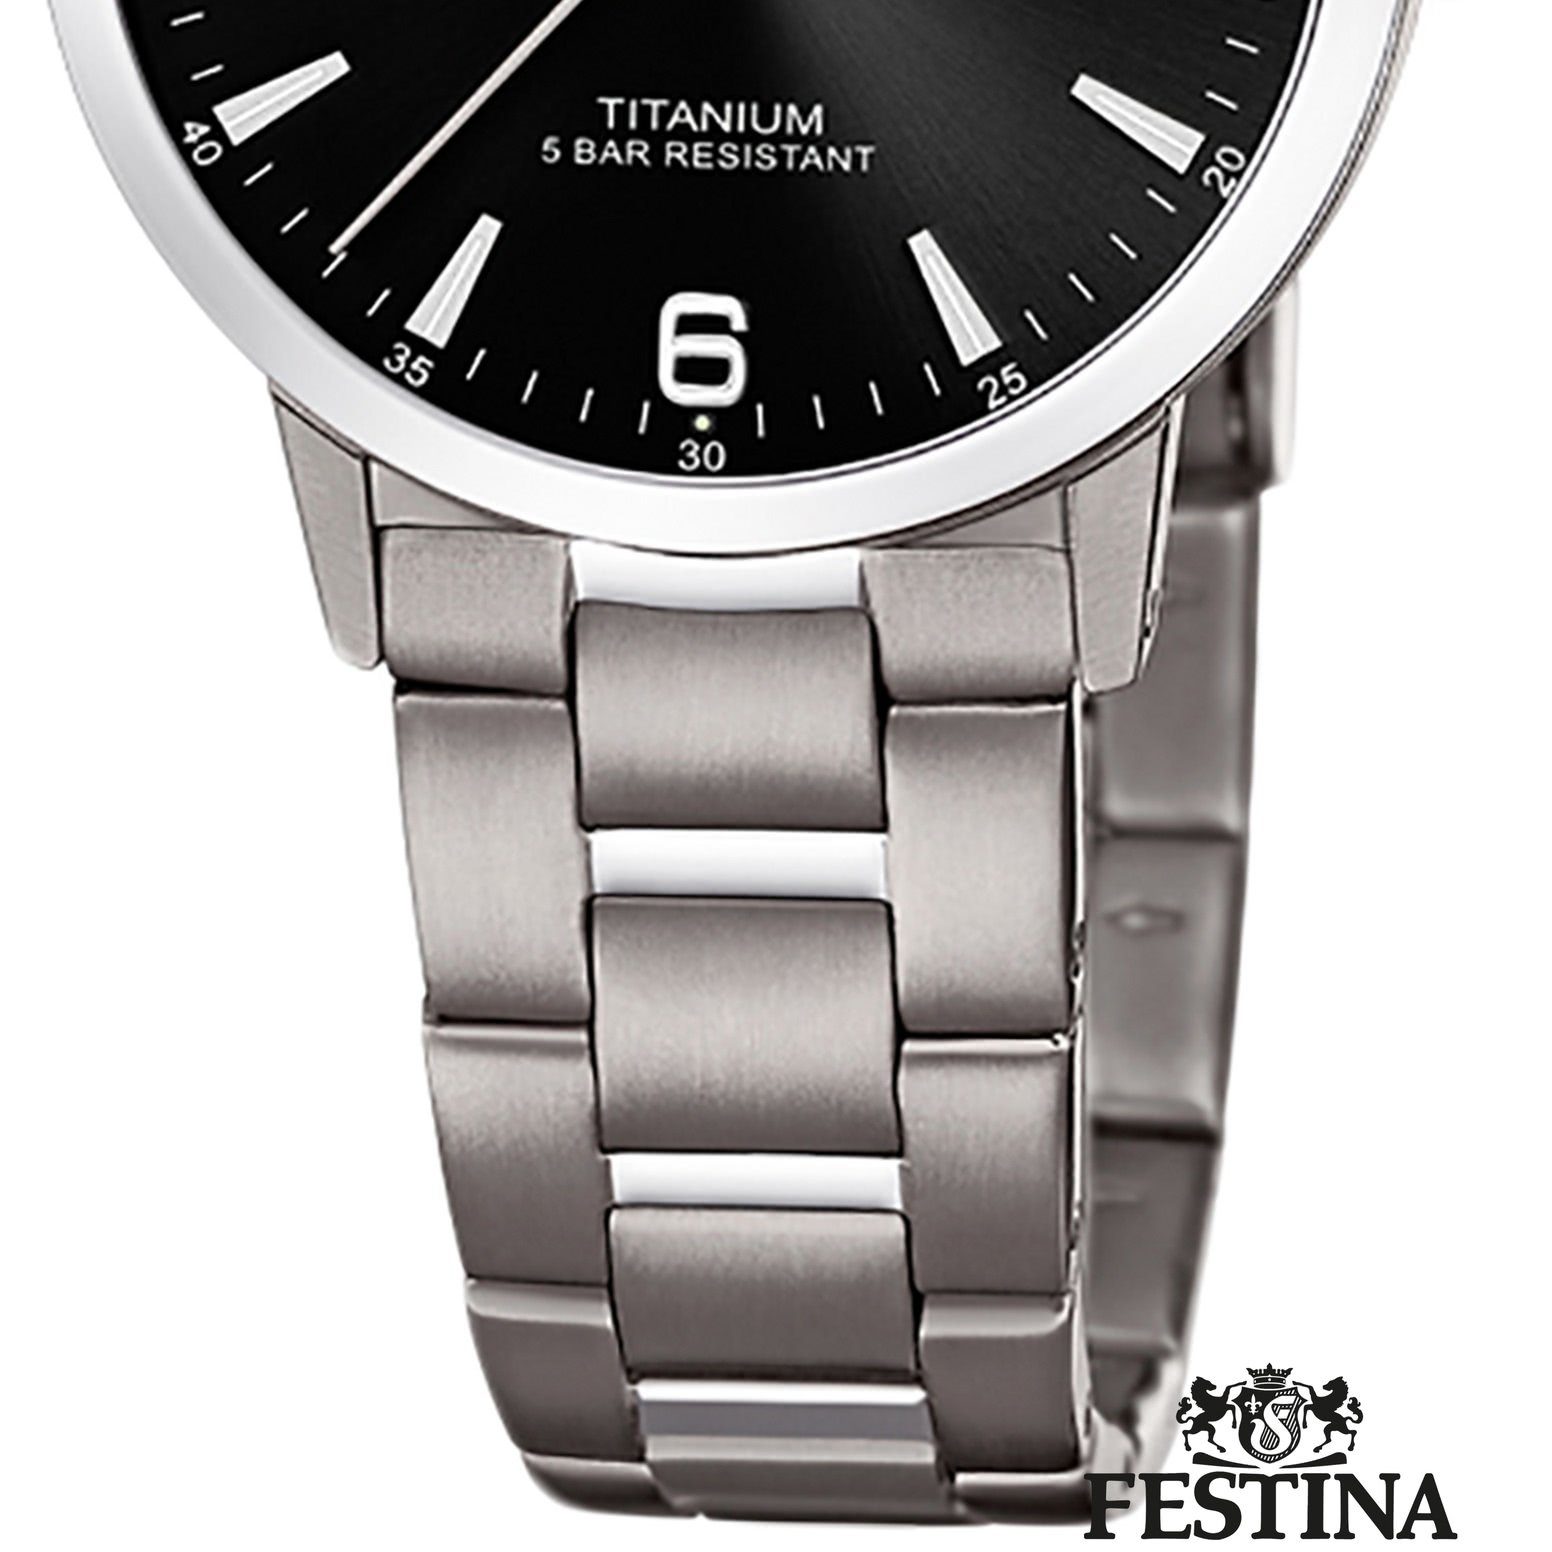 Festina Titan, Titanarmband silber Uhr Damen Quarzuhr Damen F20436/3 rund, Festina Armbanduhr Elegant